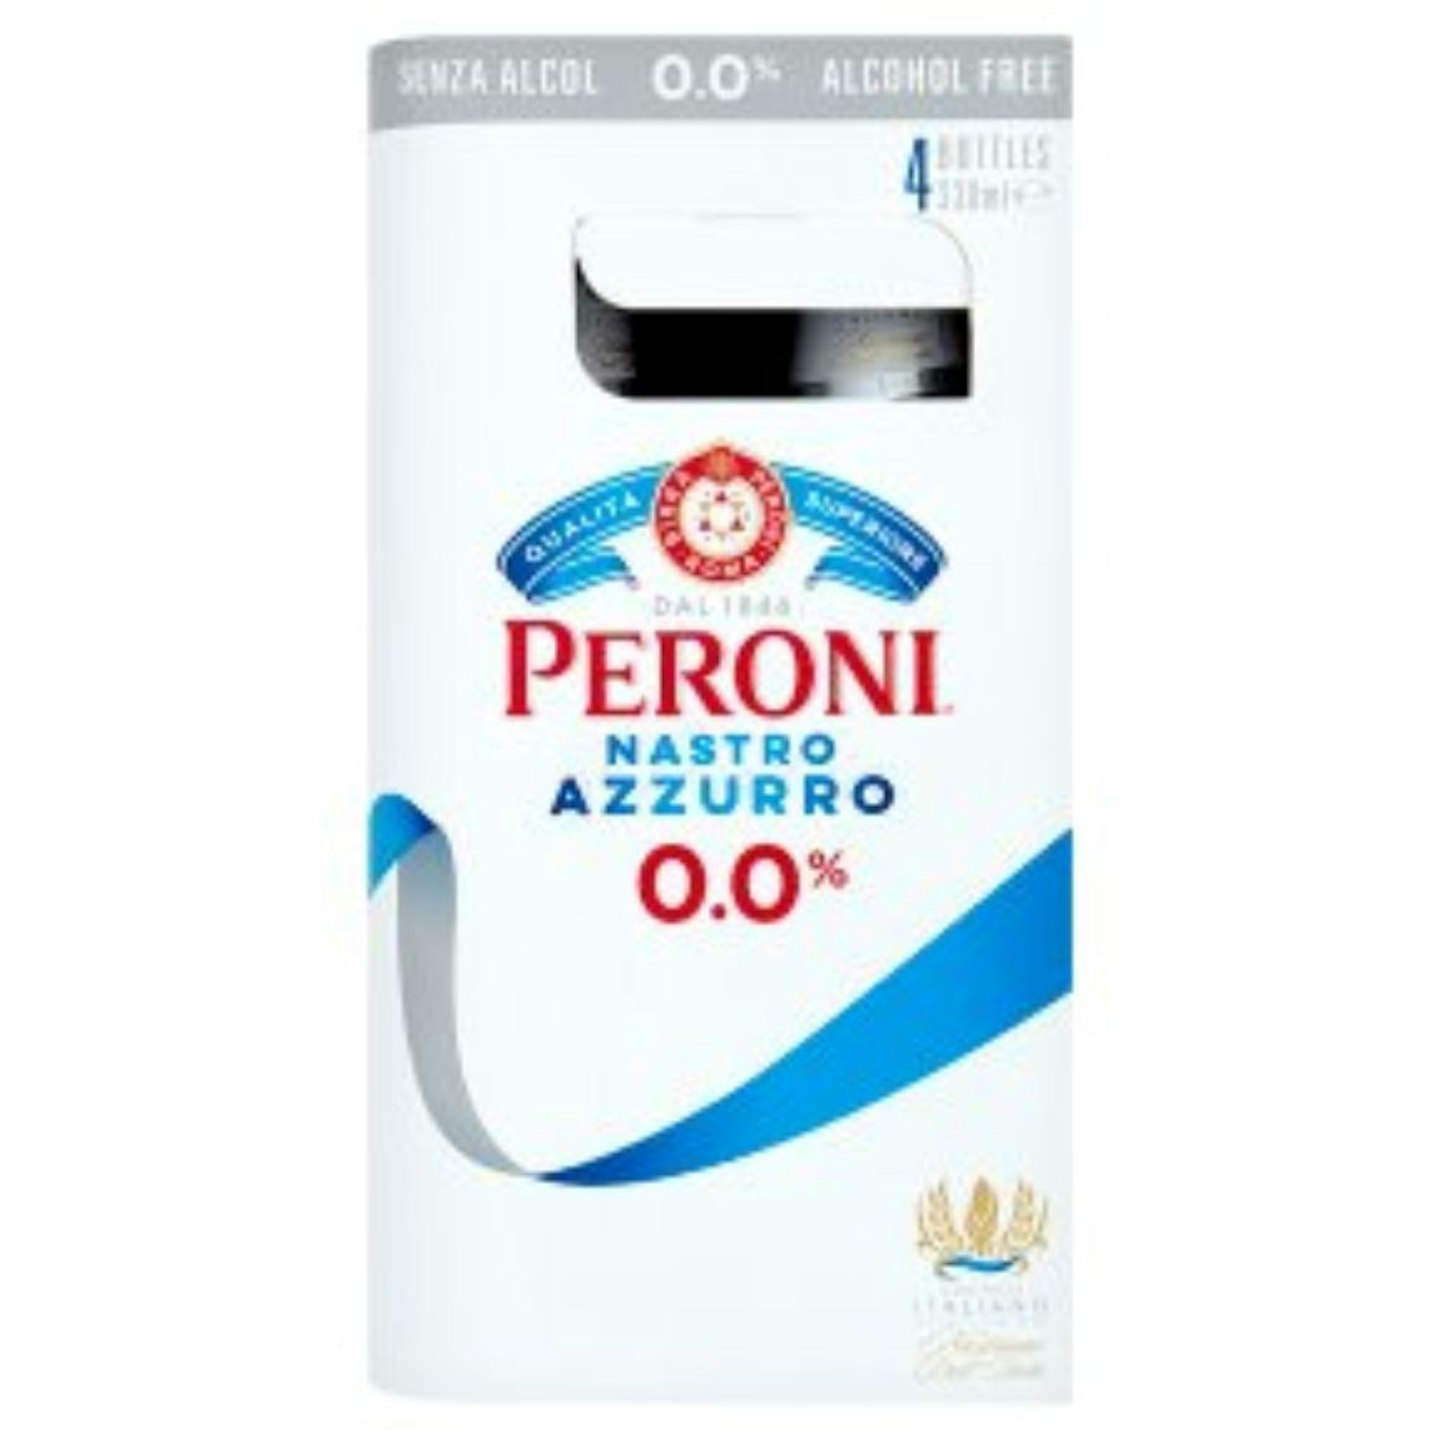 Peroni Nastro Azzurro 0.0% Alcohol Free Lager Bottle